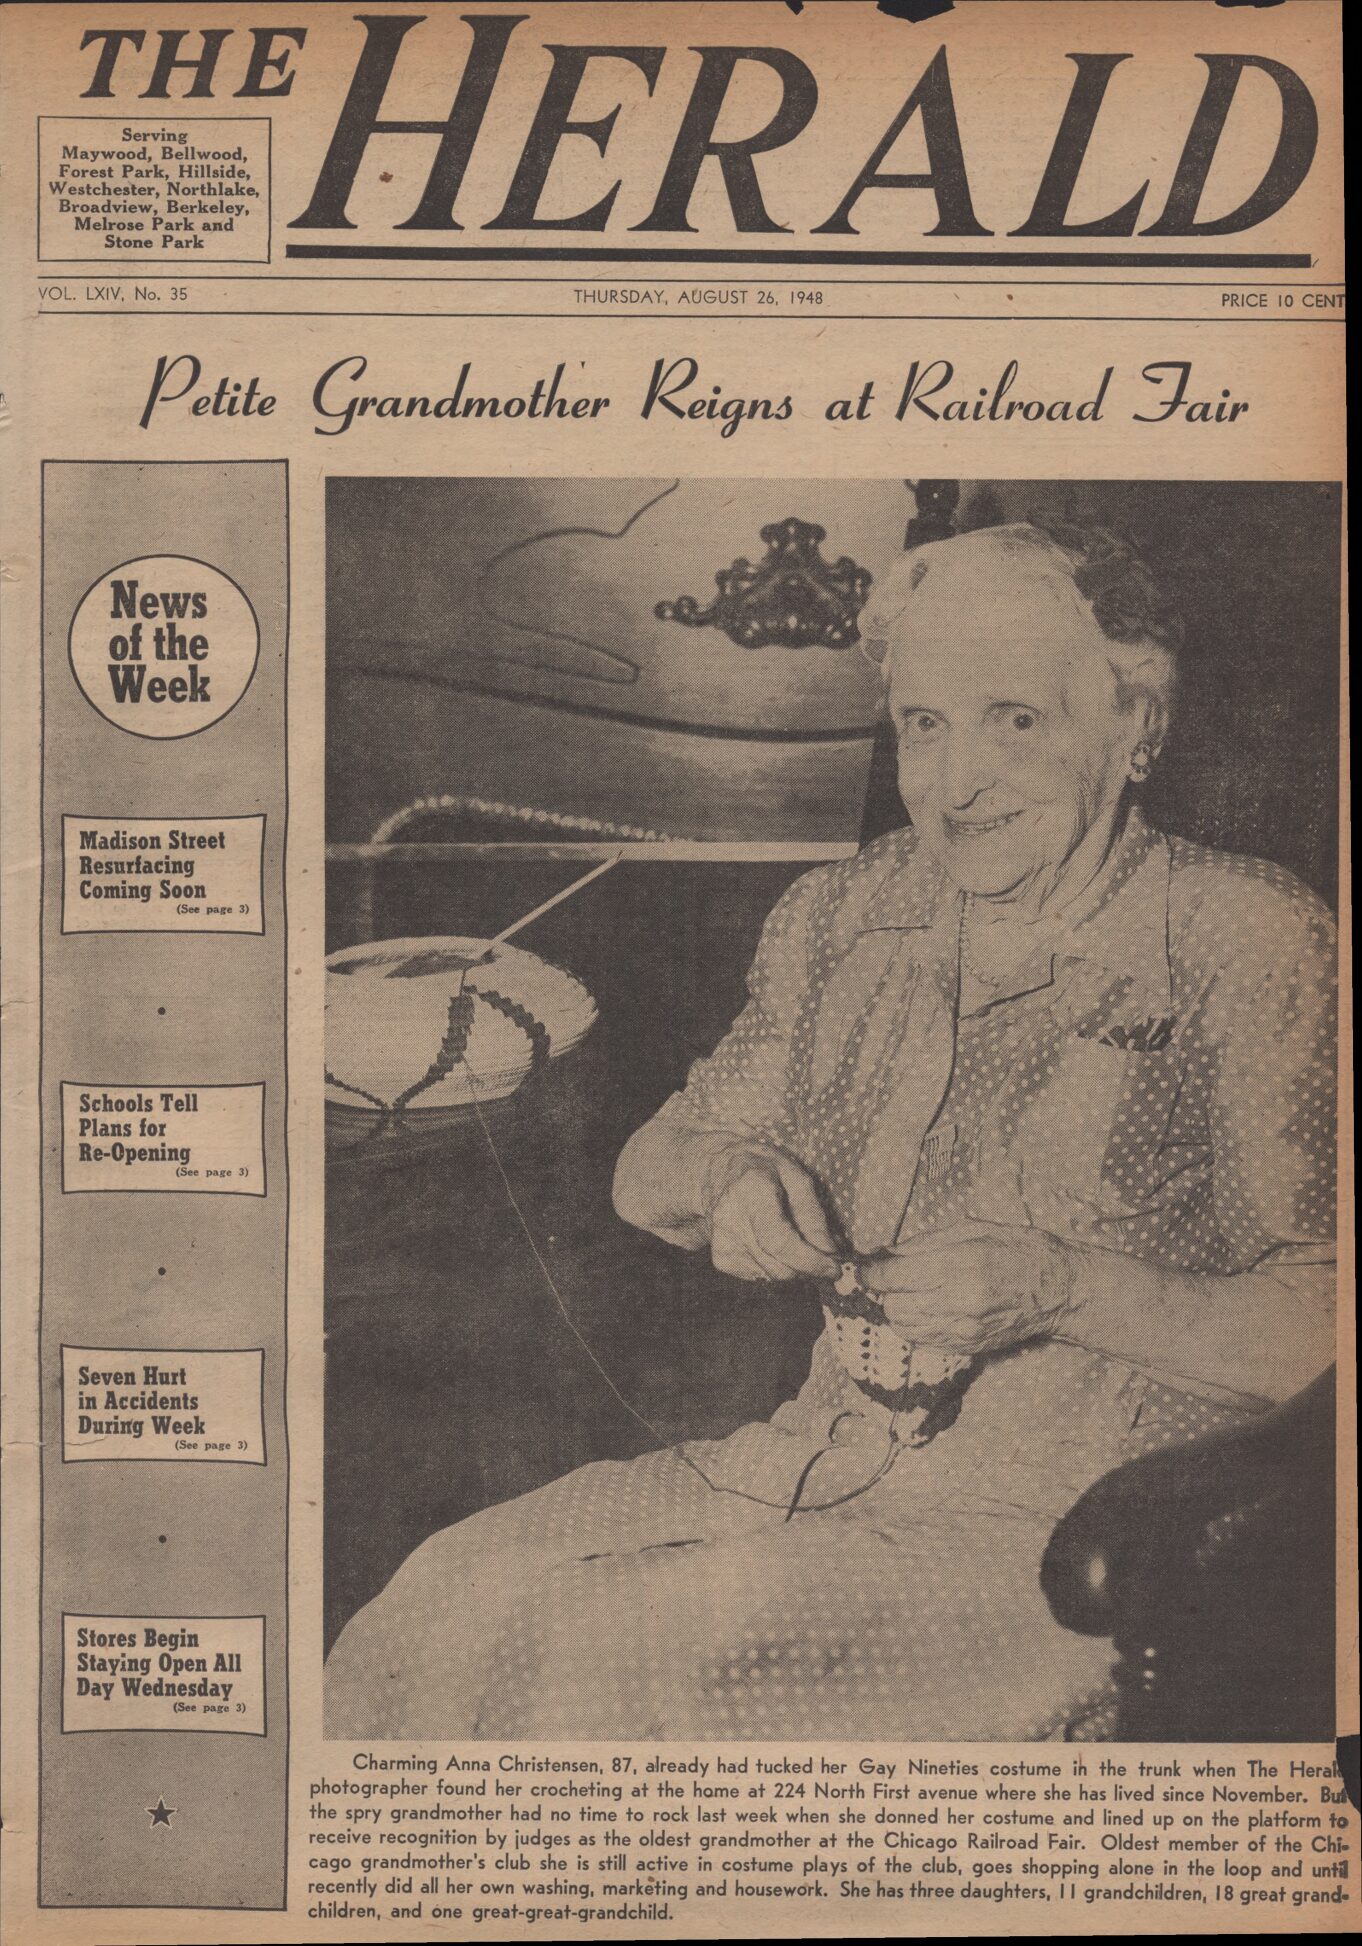 The Herald – 19480826